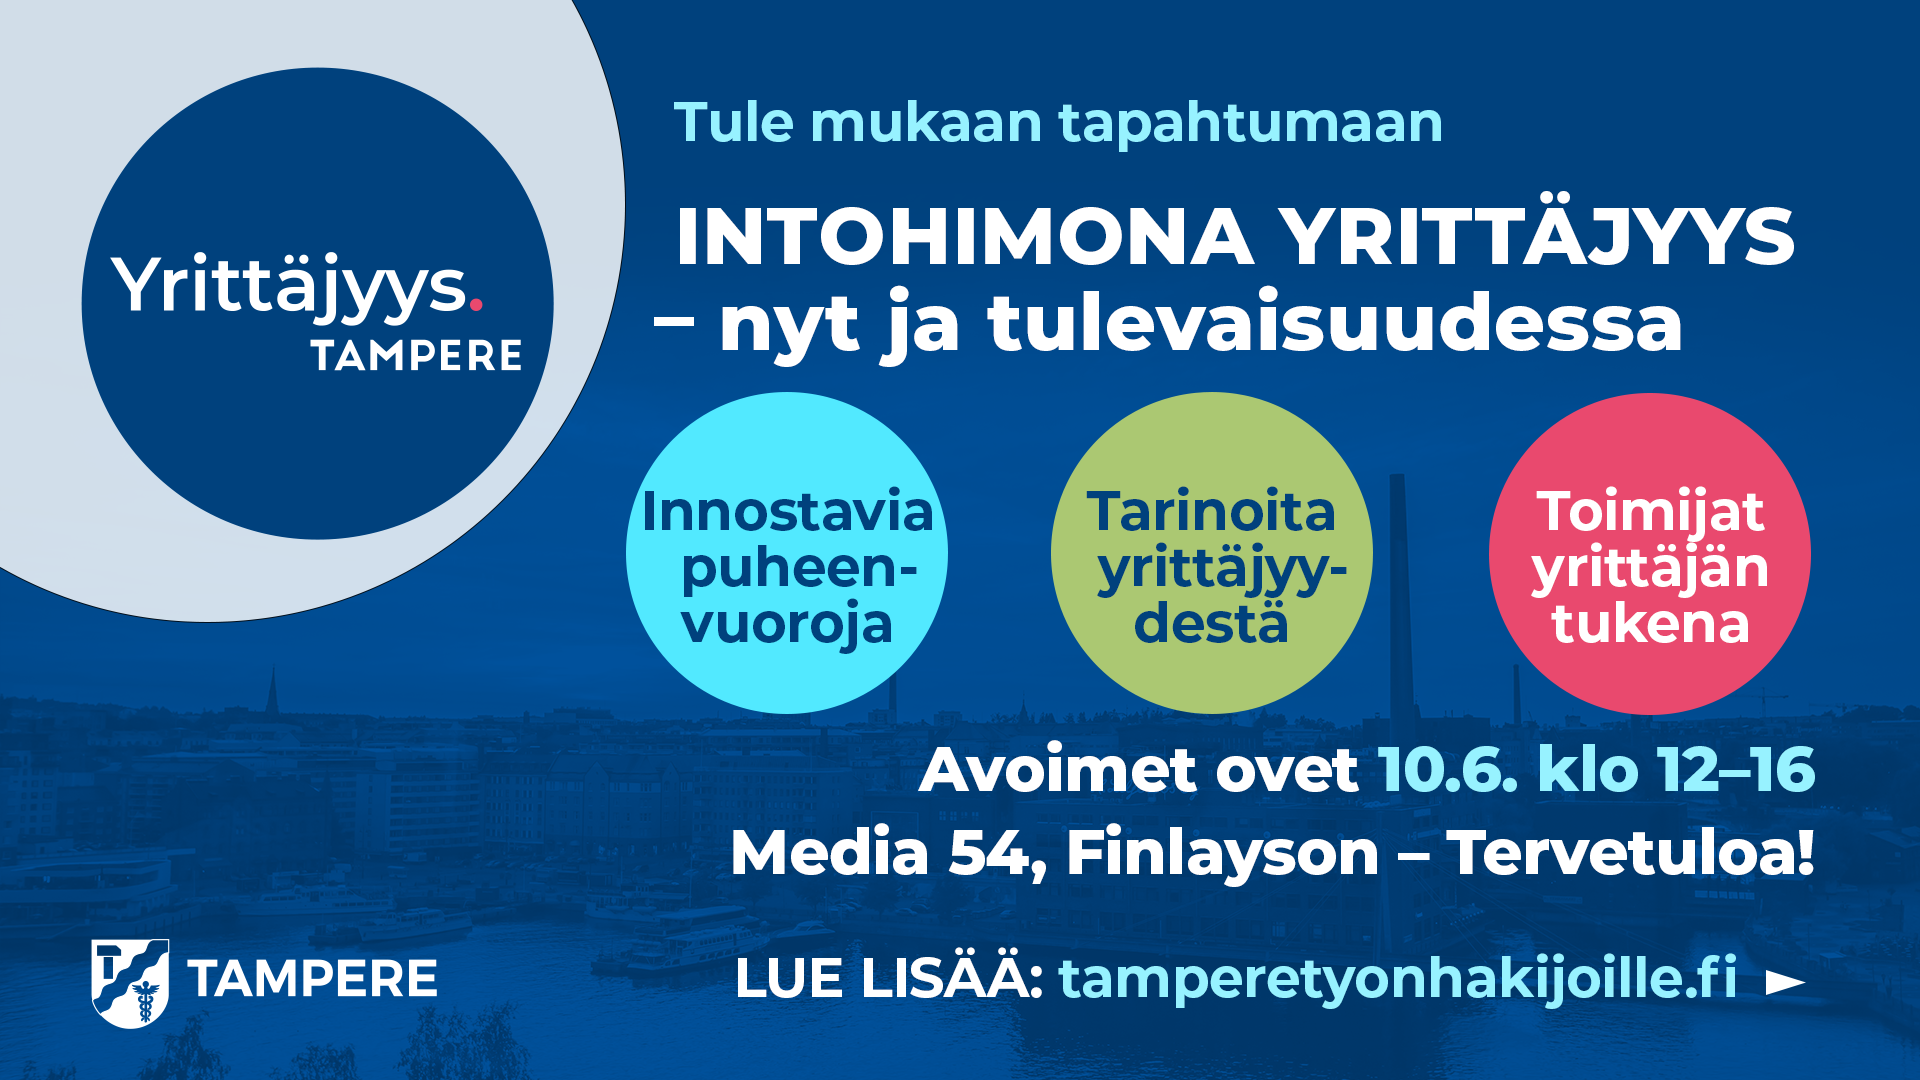 Intohimona yrittäjyys - Tribe Tampere